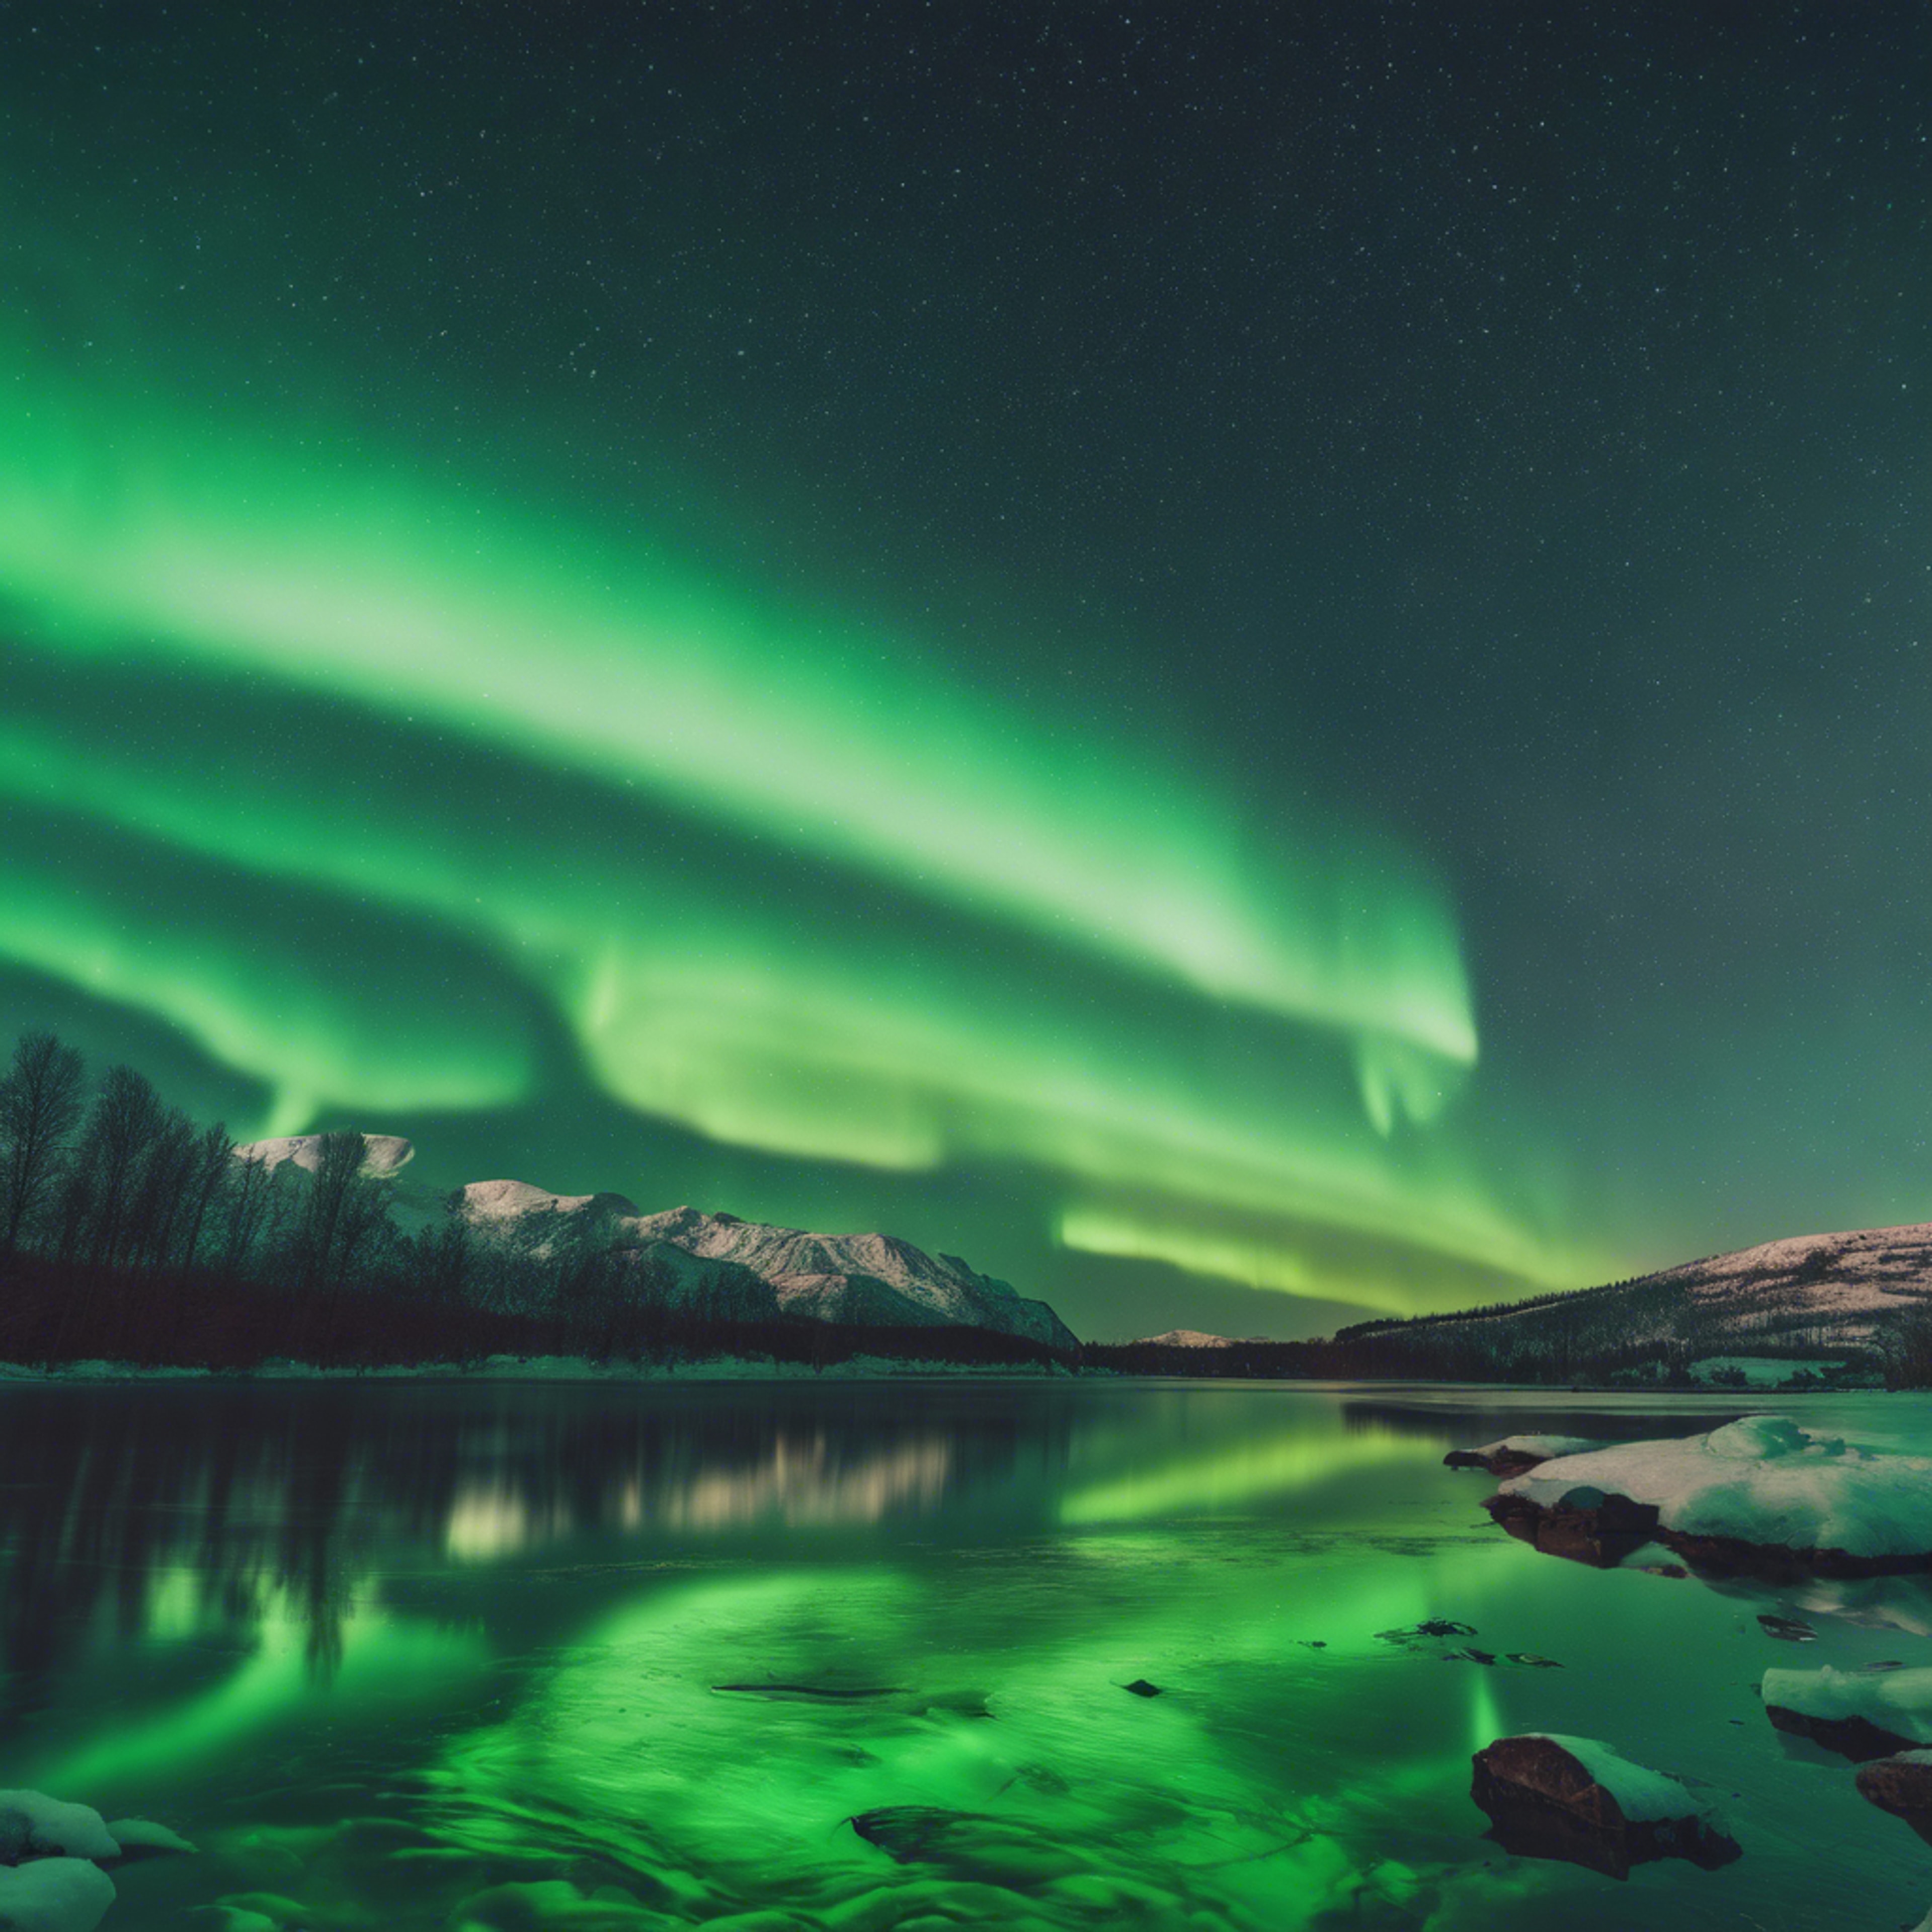 Cool green aurora borealis in the night sky. duvar kağıdı[6739bc2aef4a46929ef0]